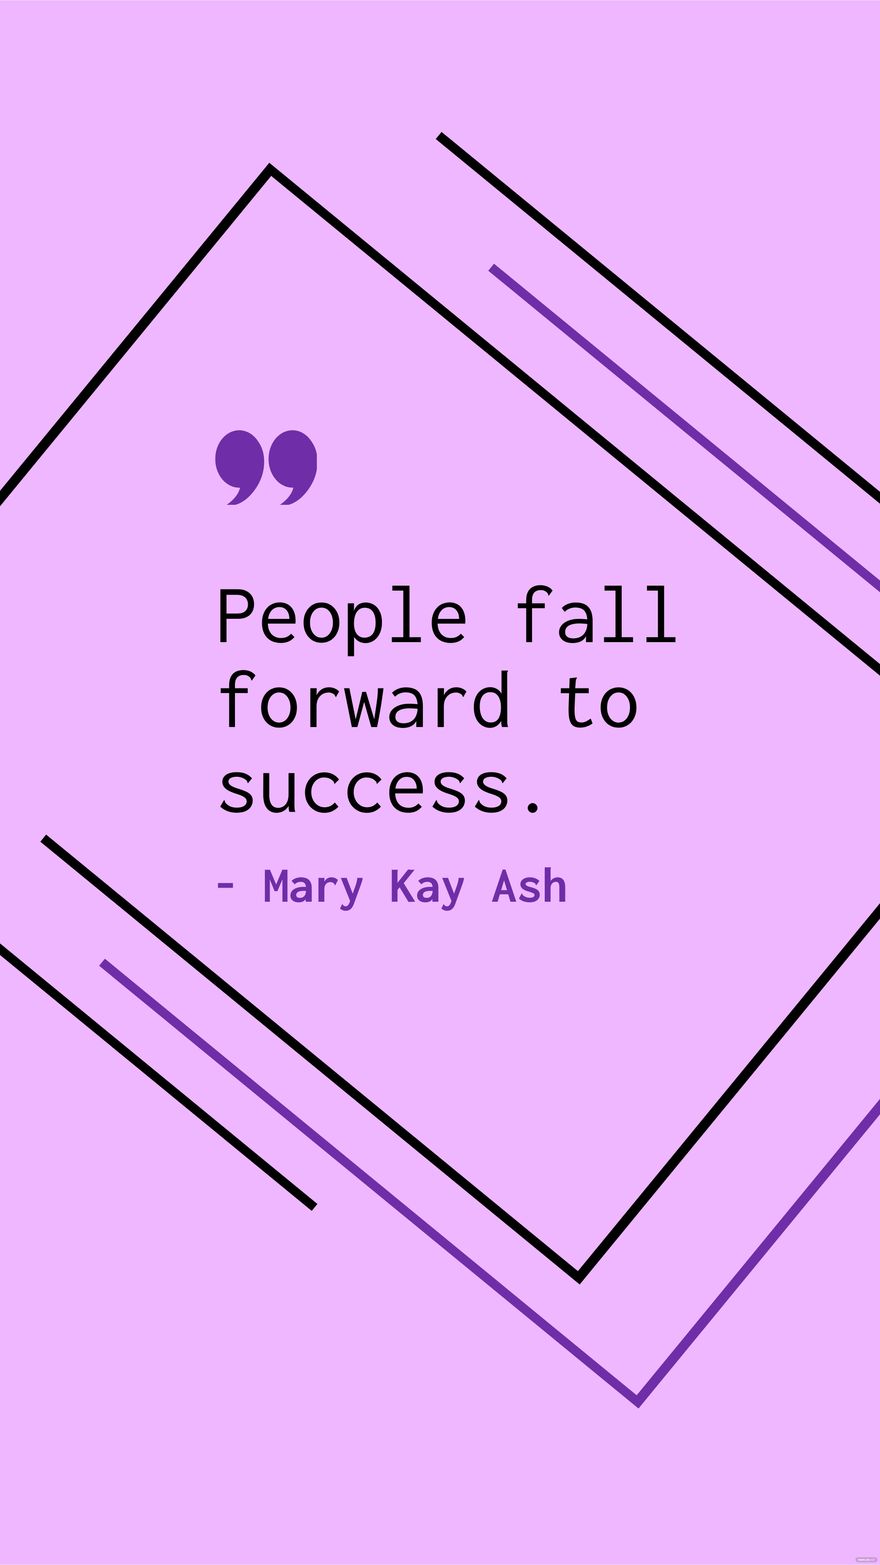 Mary Kay Ash - People fall forward to success.